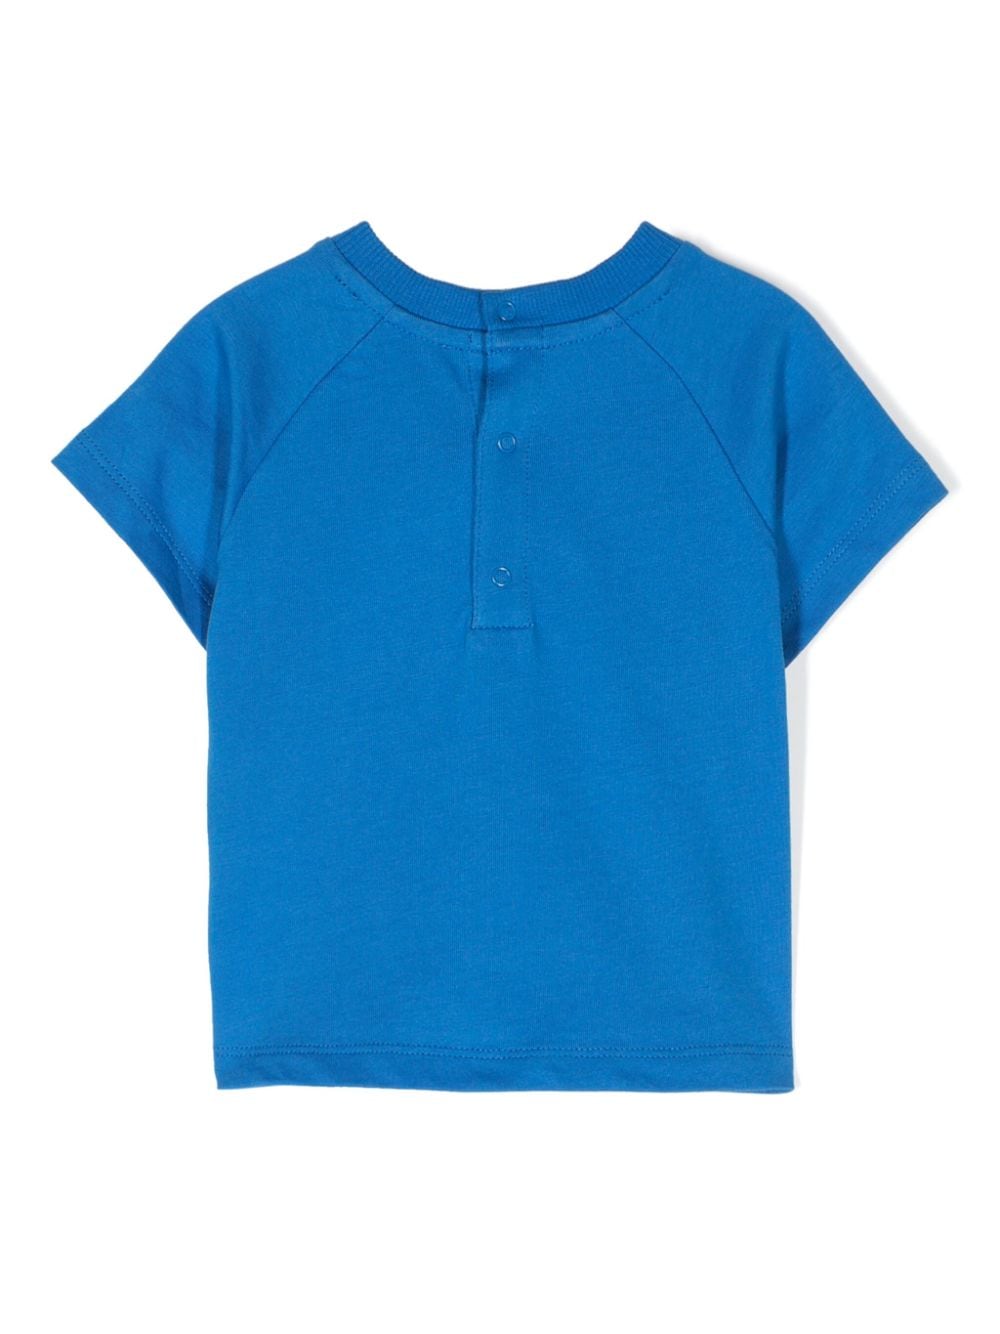 Moschino Royal Blue Bear Logo Tee Shirt